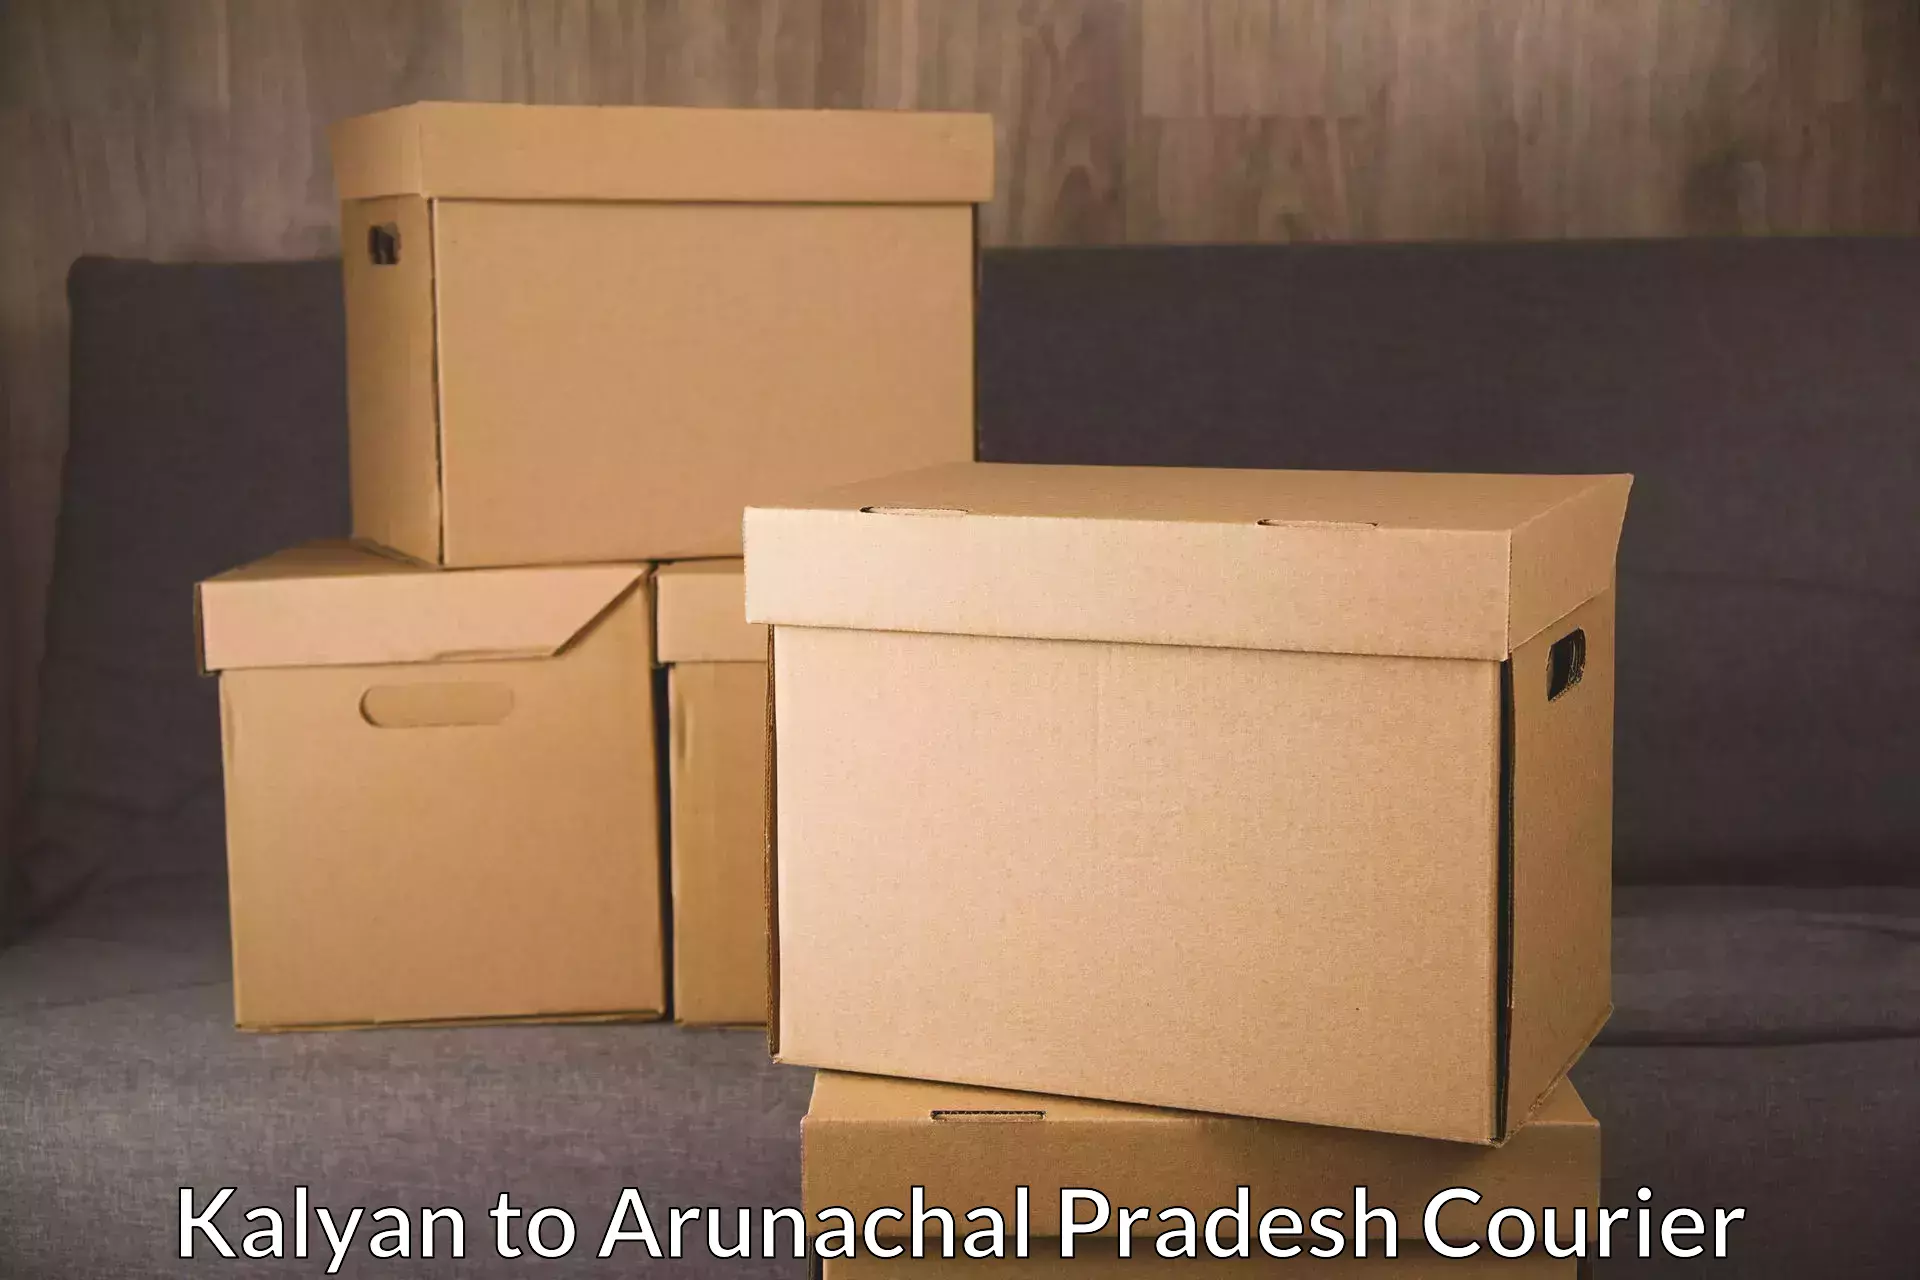 State-of-the-art courier technology Kalyan to Arunachal Pradesh